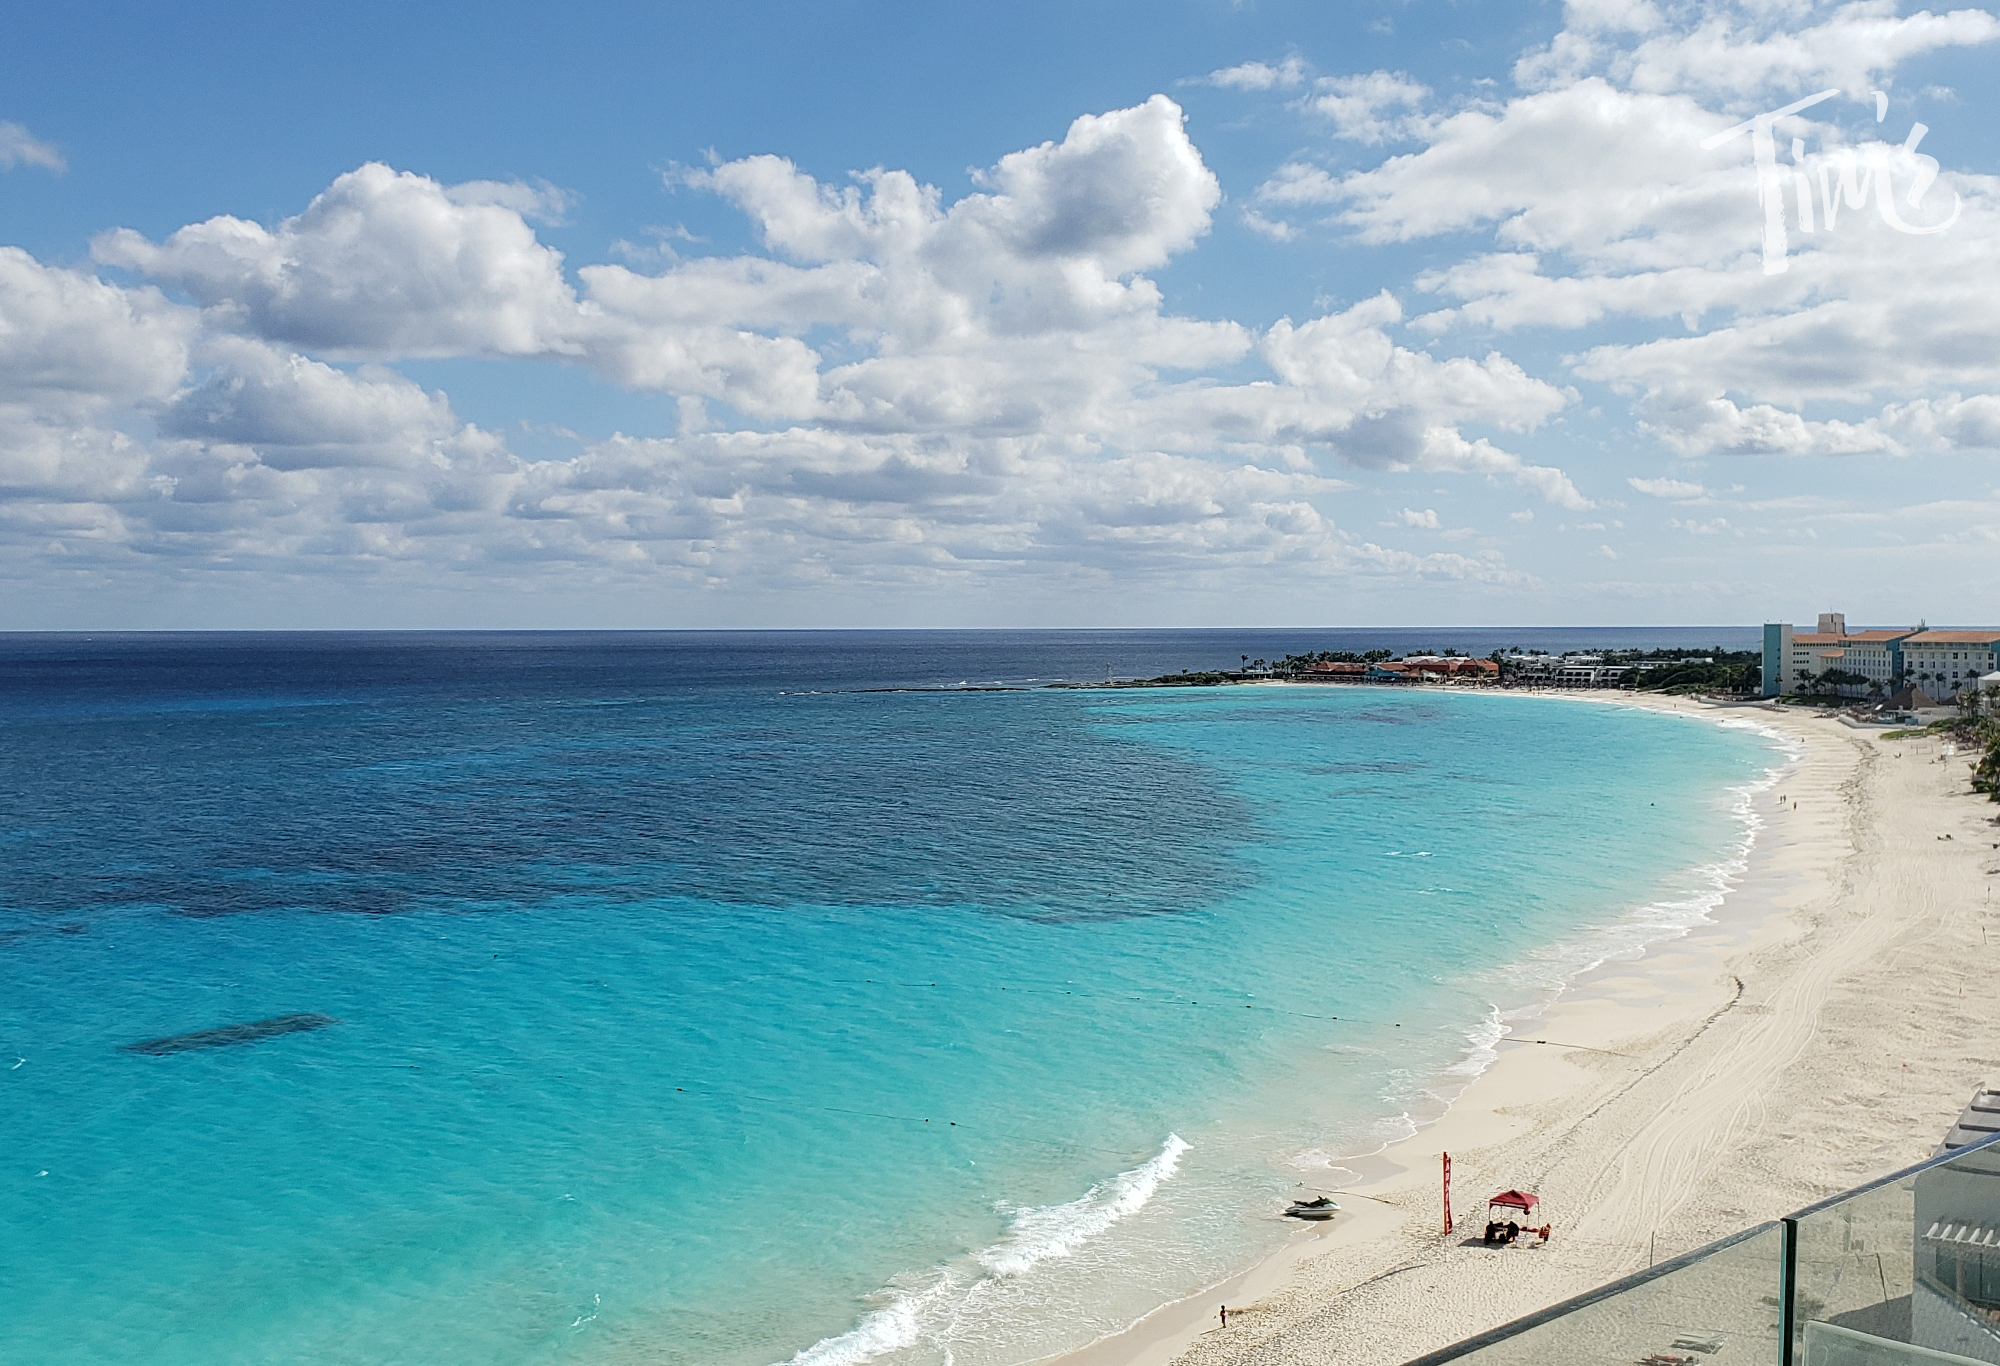 Cancun Parasailing and Wave Runner Rentals